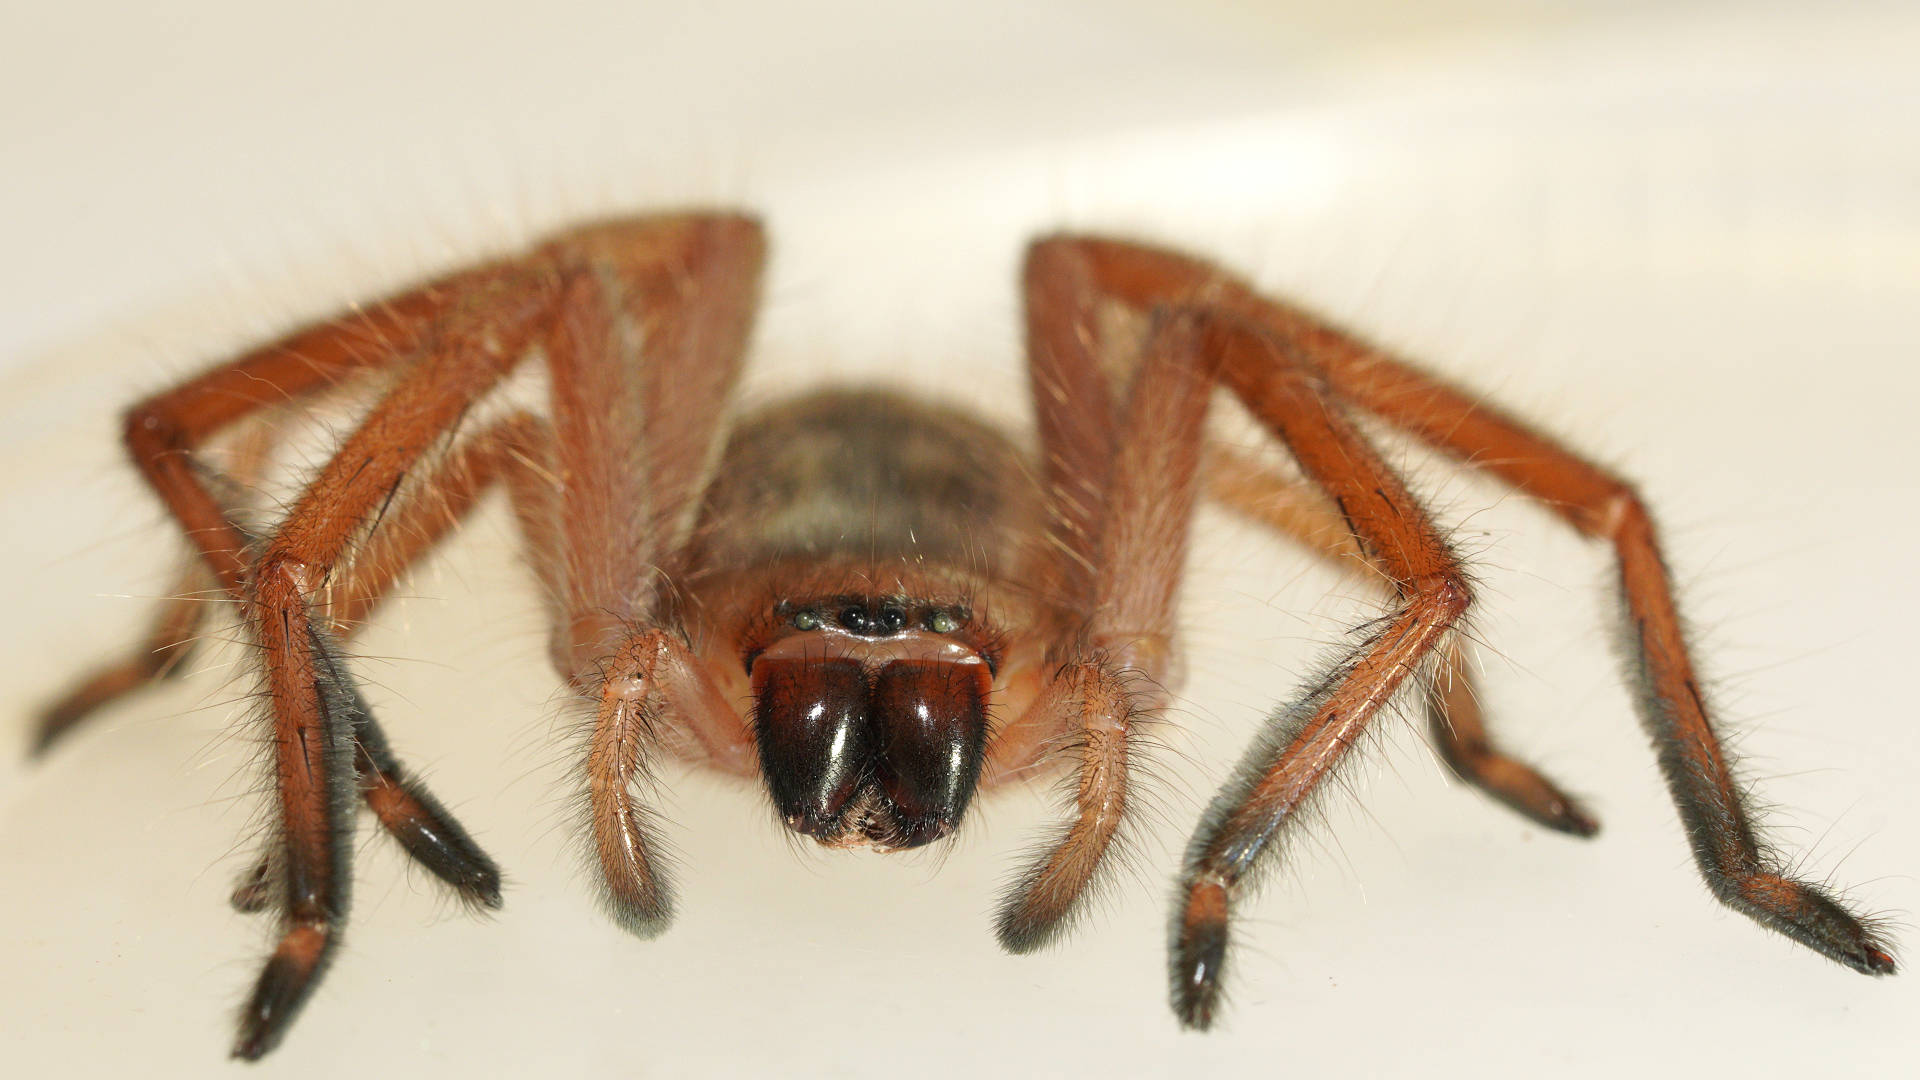 Social Huntsman Spider (Delena cancerides)